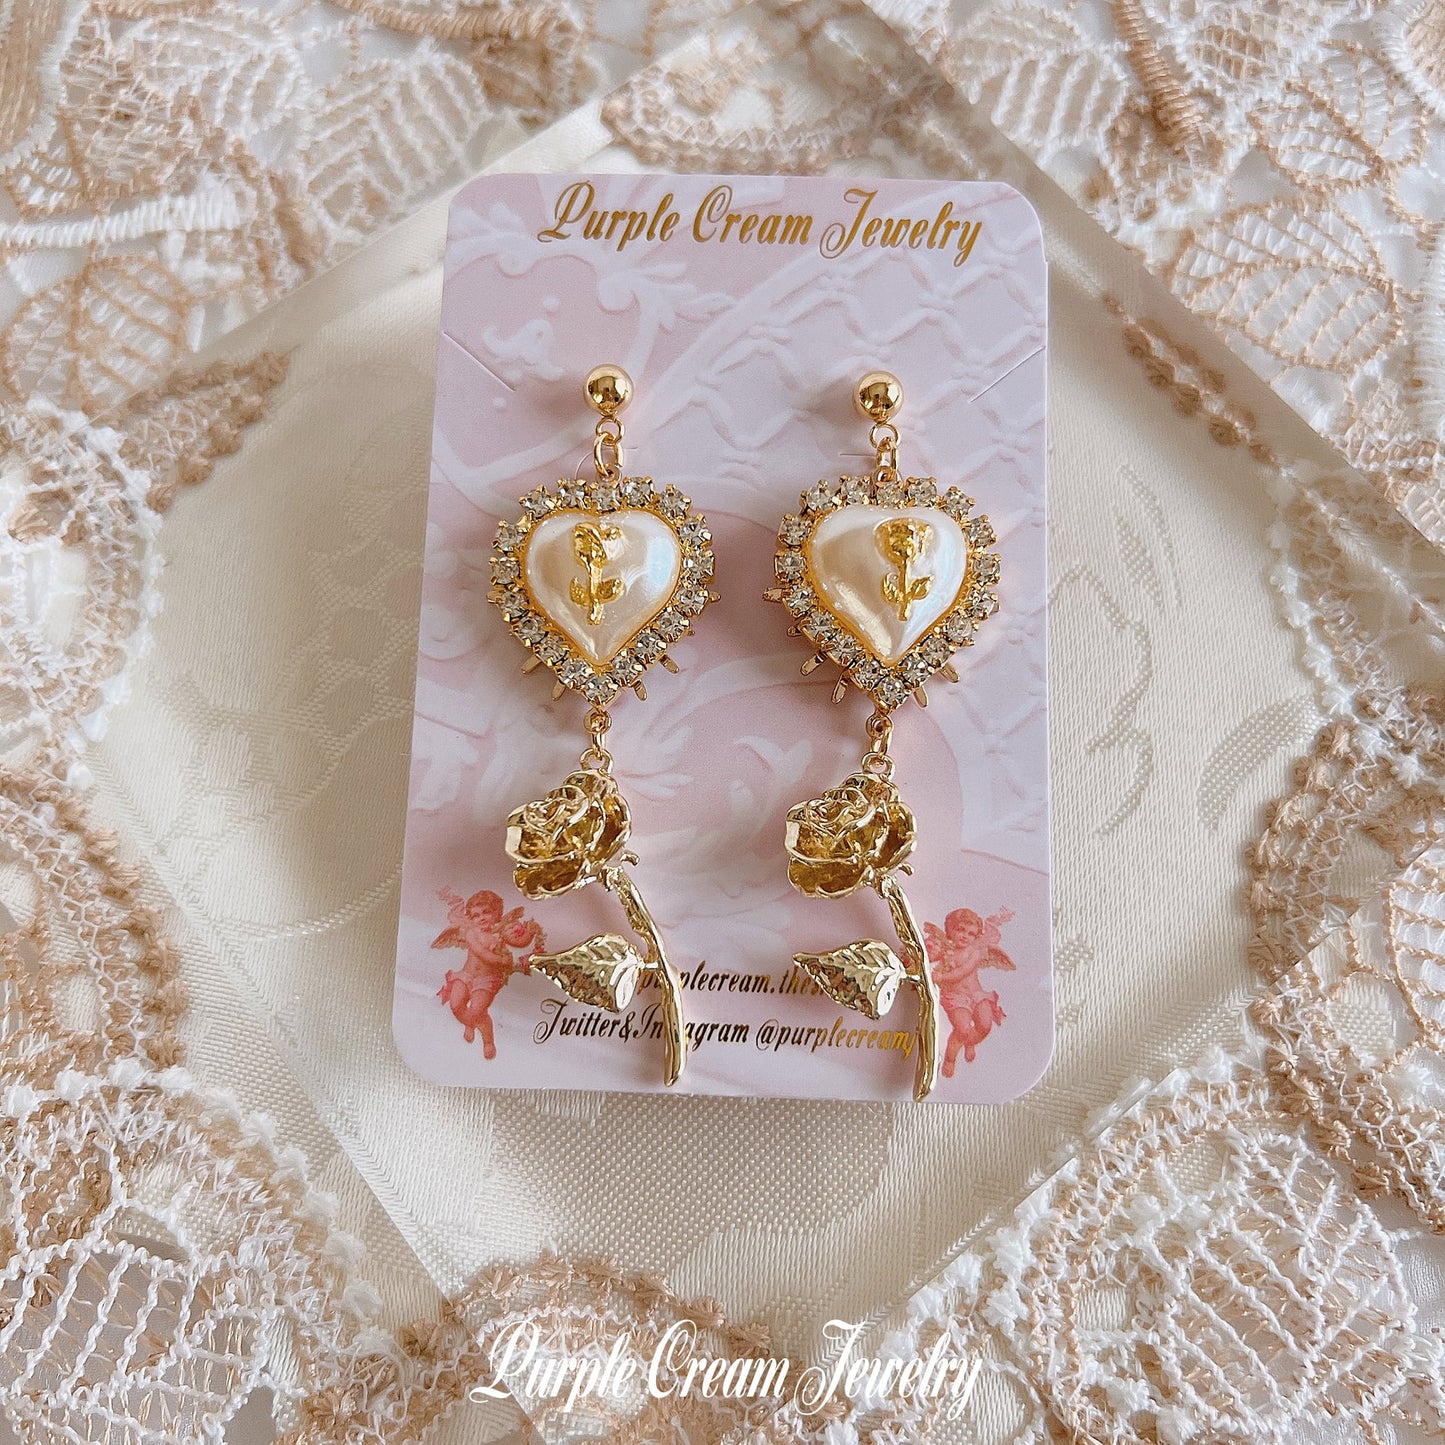 Purple Cream Girly White Rose Earrings GOLD P1275